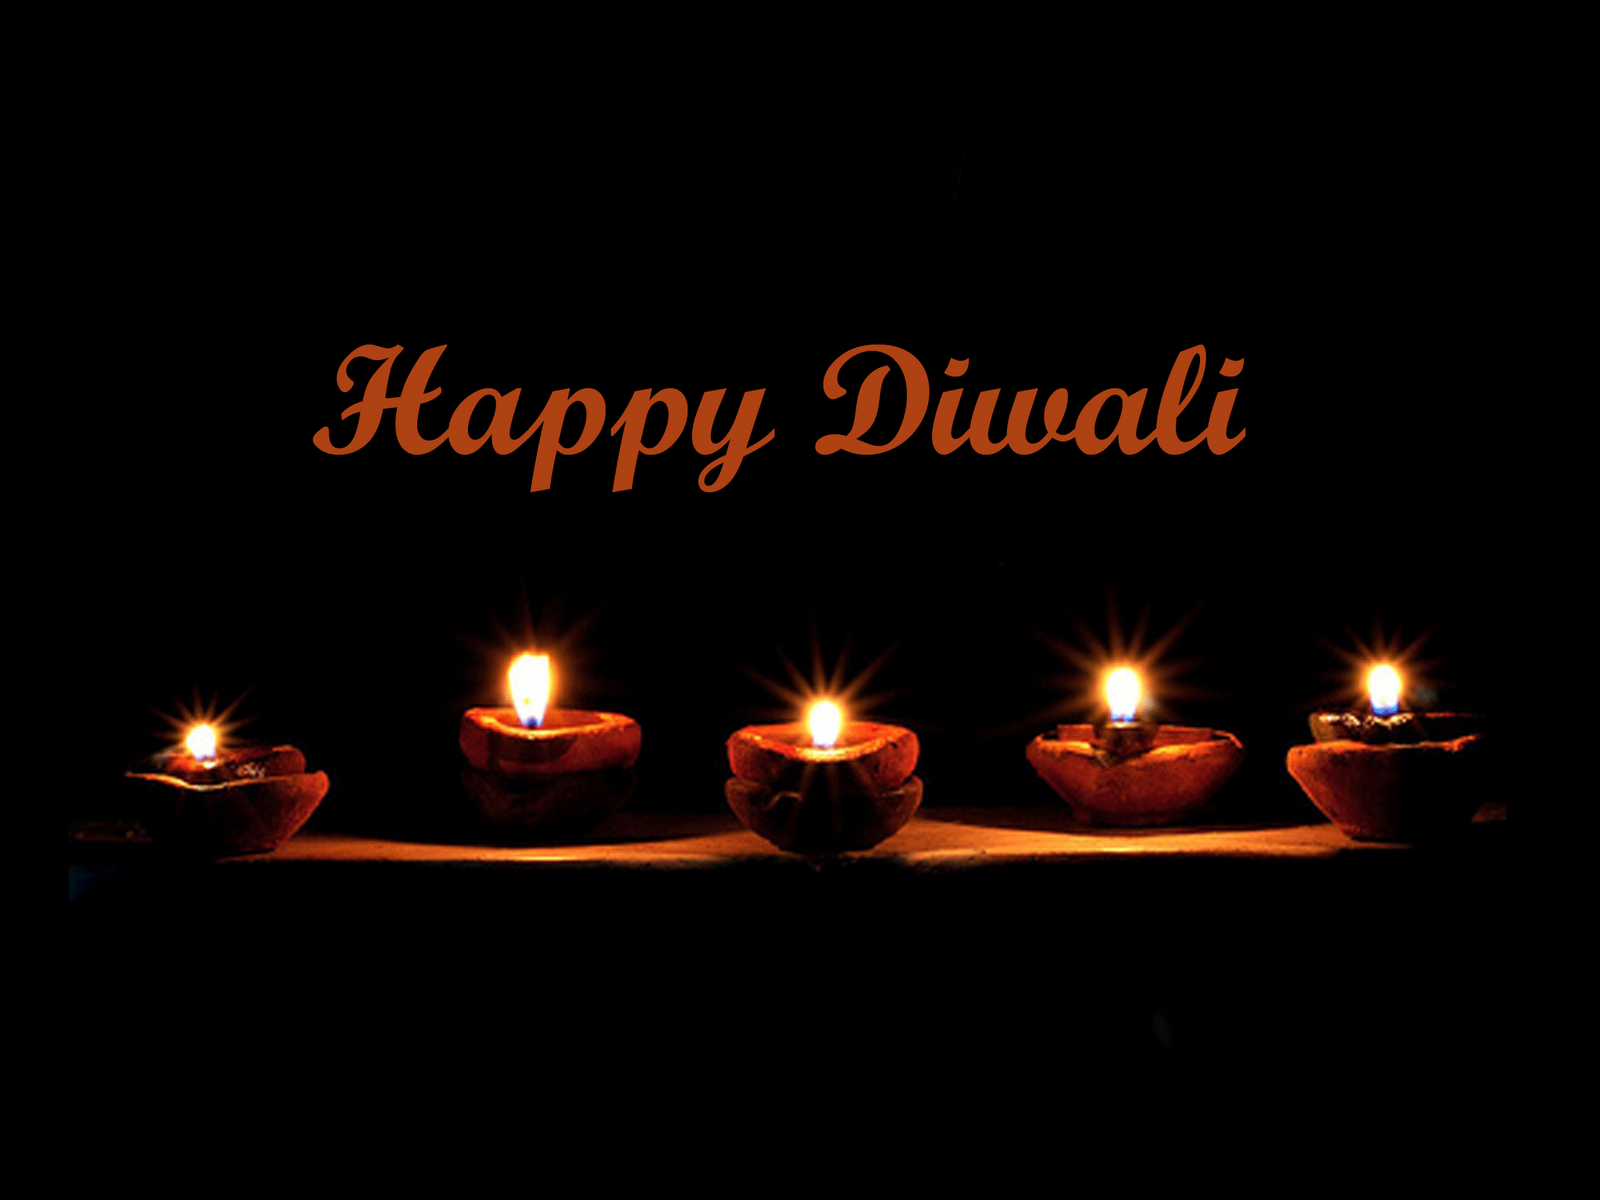 felice diwali wallpaper hd widescreen,candela,illuminazione,diwali,buio,vacanza